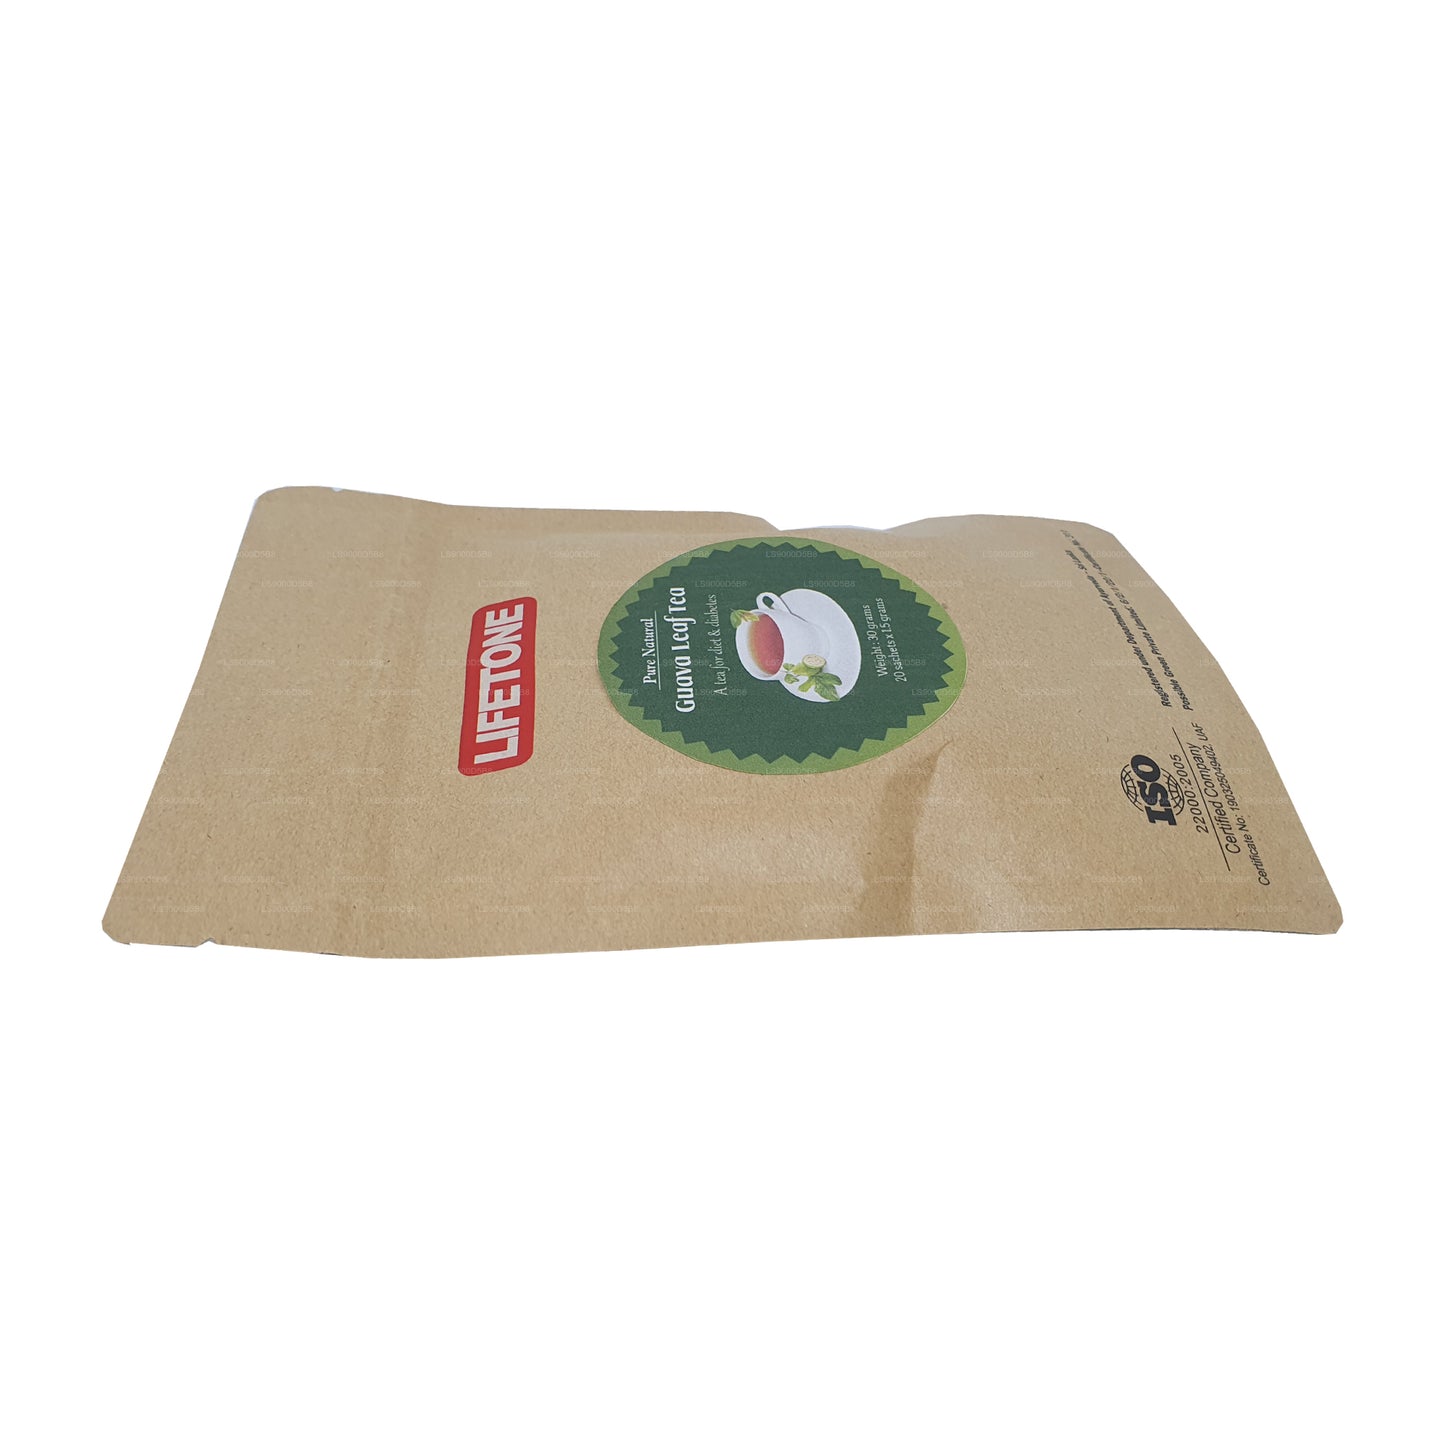 Té de hojas de guayaba Lifetone (30 g)